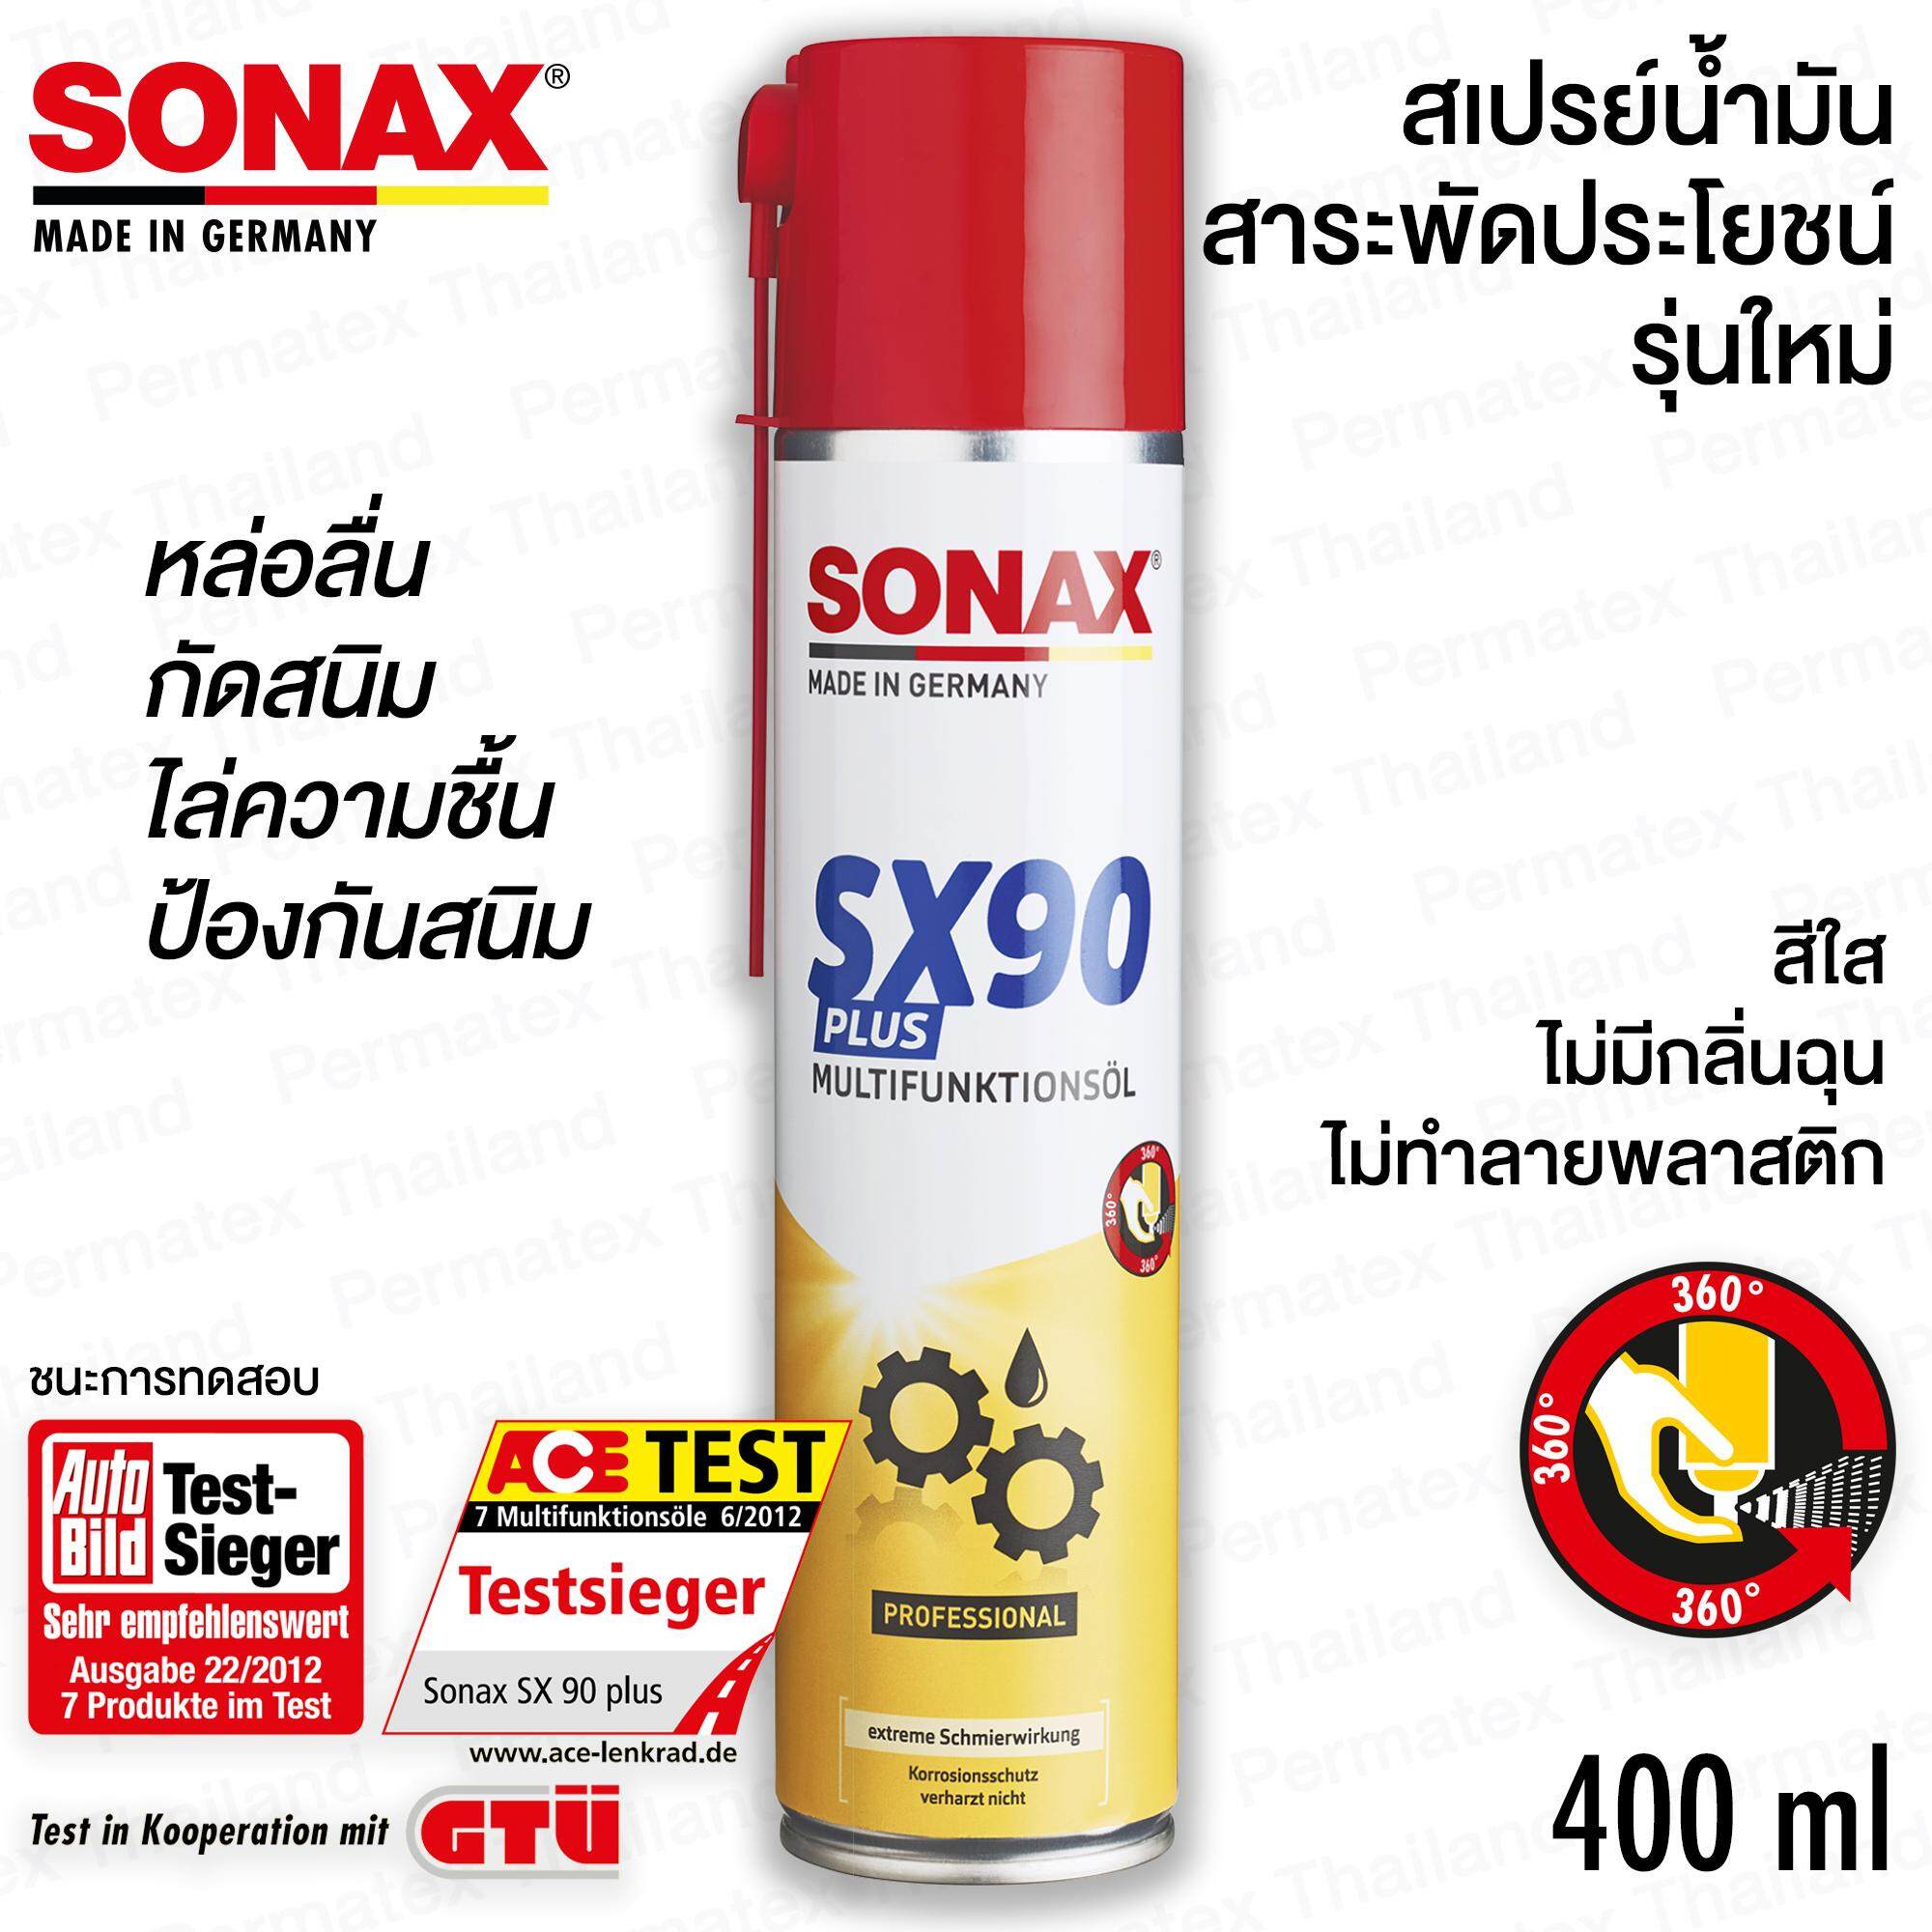 SONAX SX90 PLUS สเปรย์น้ำมันสารพัดประโยชน์ รุ่นใหม่